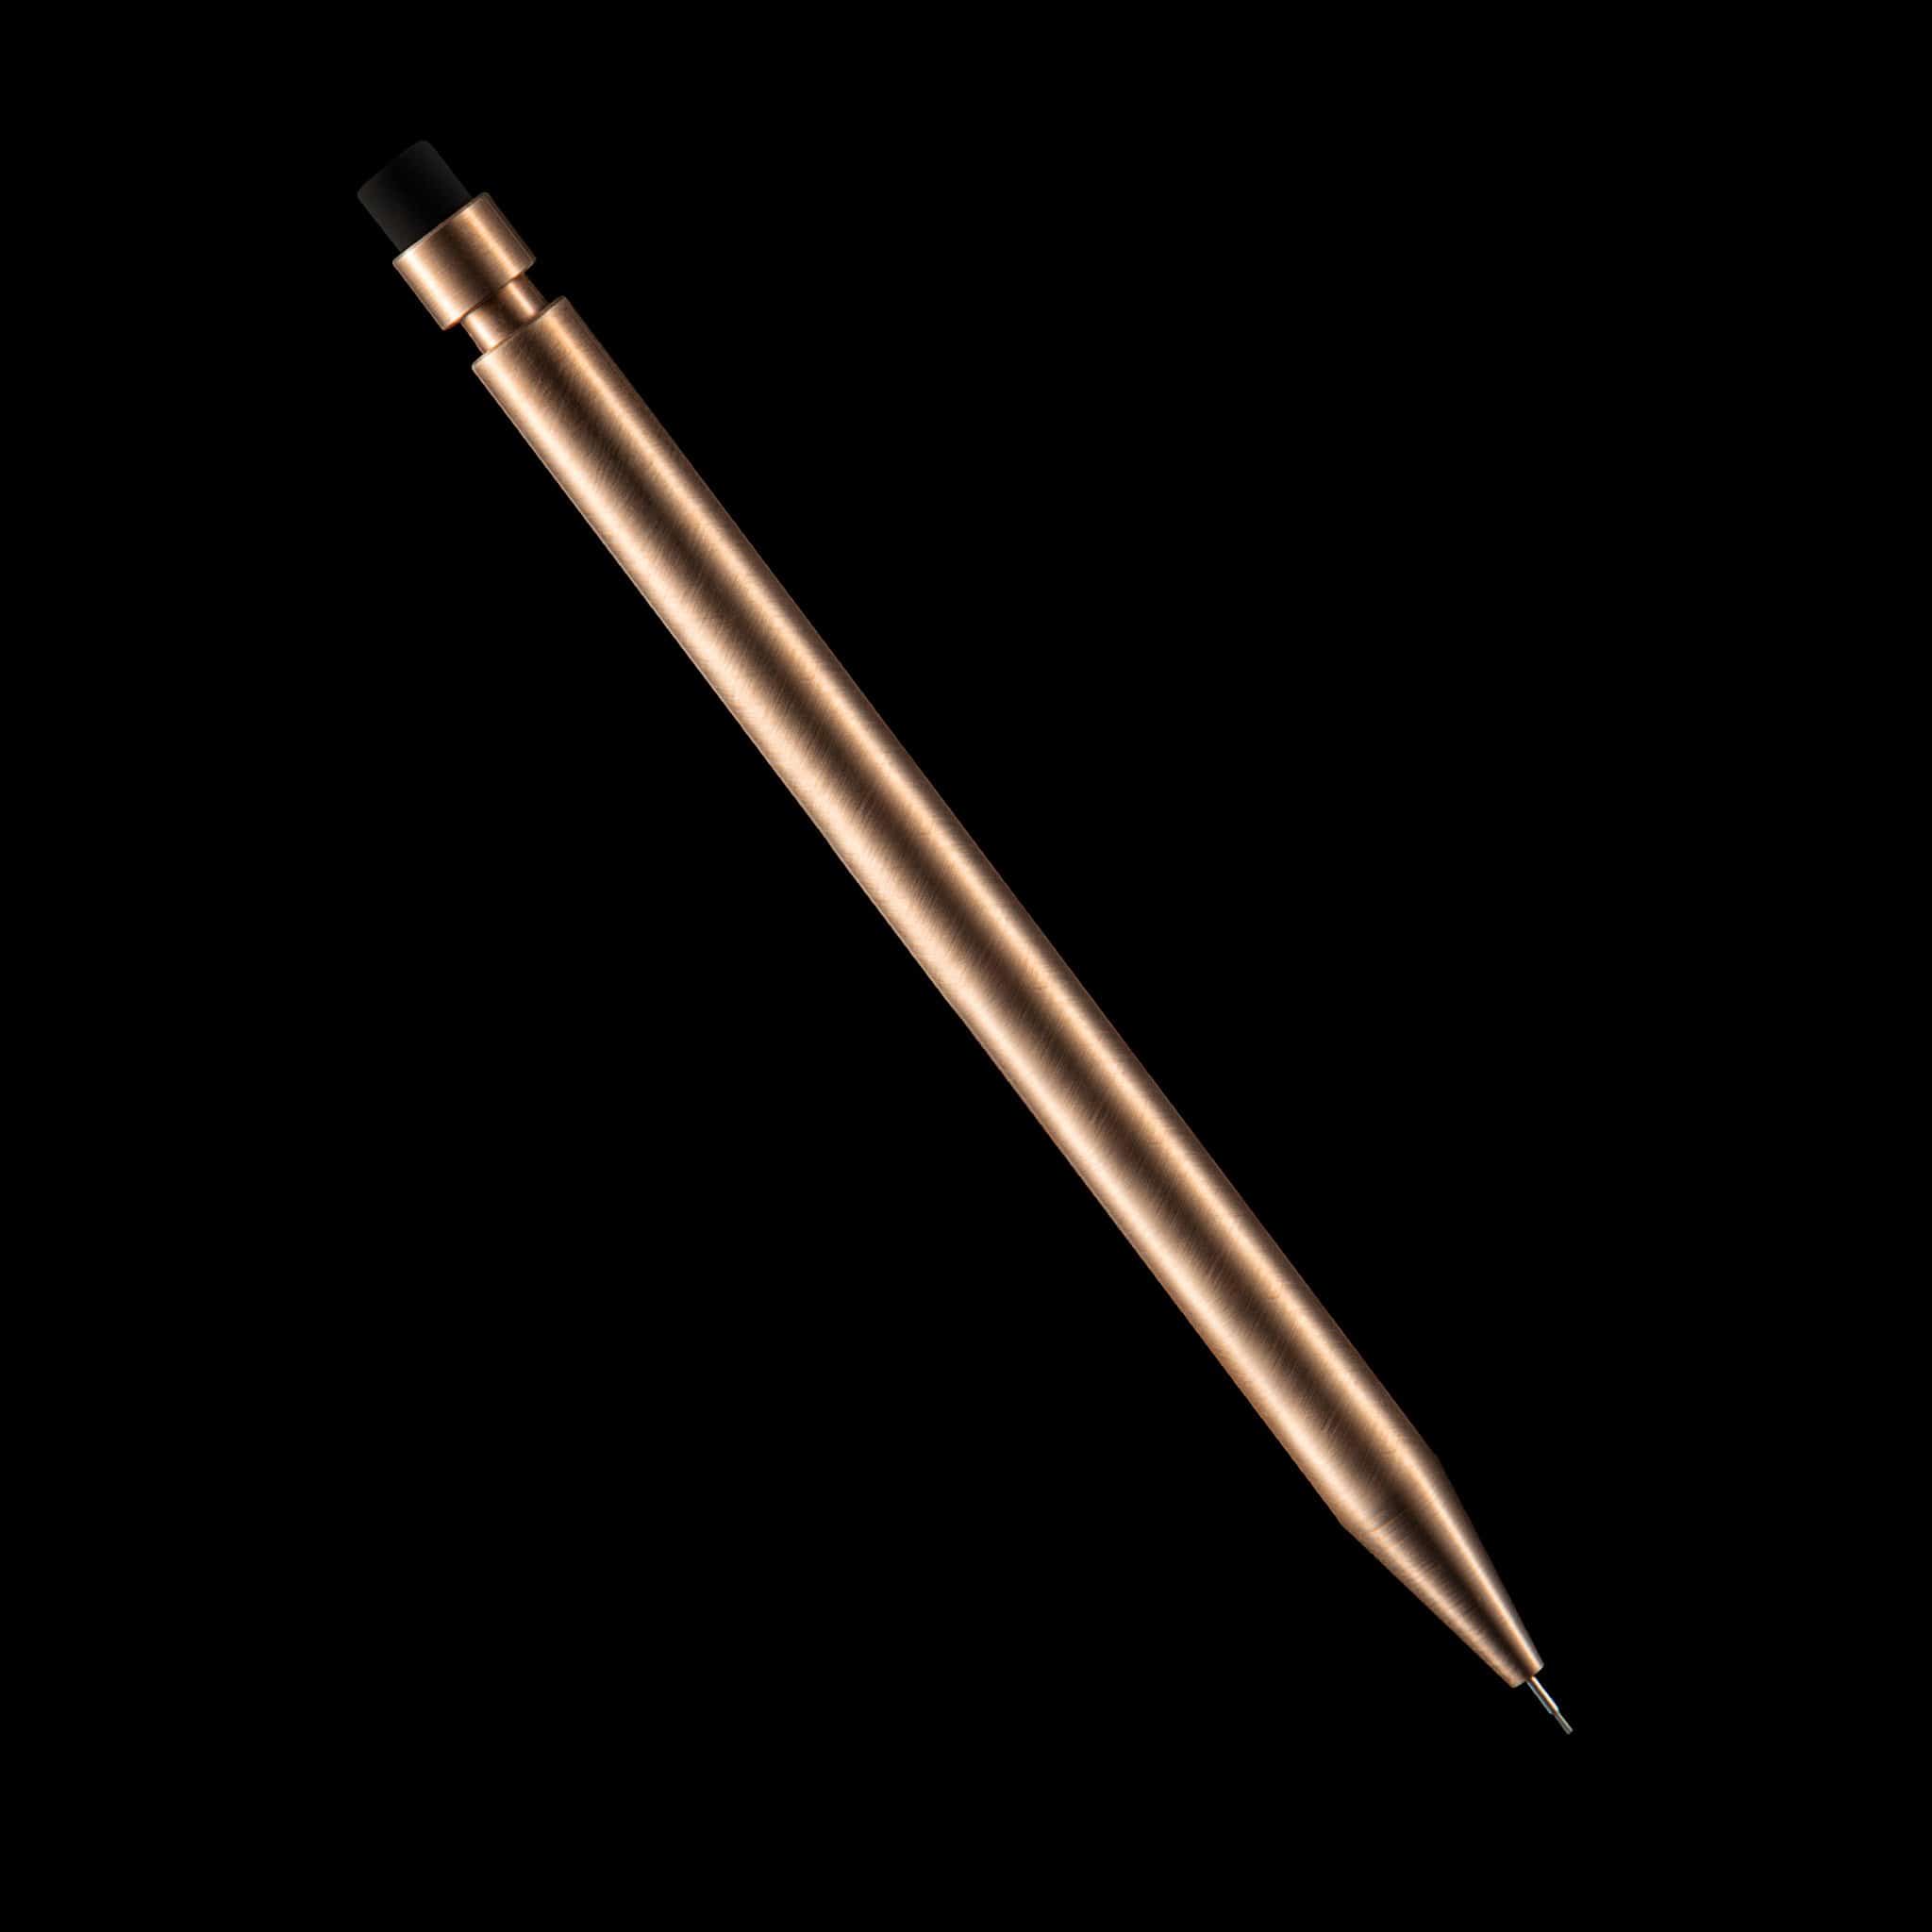 Choo-Choo 8500, Jumbo Pencil